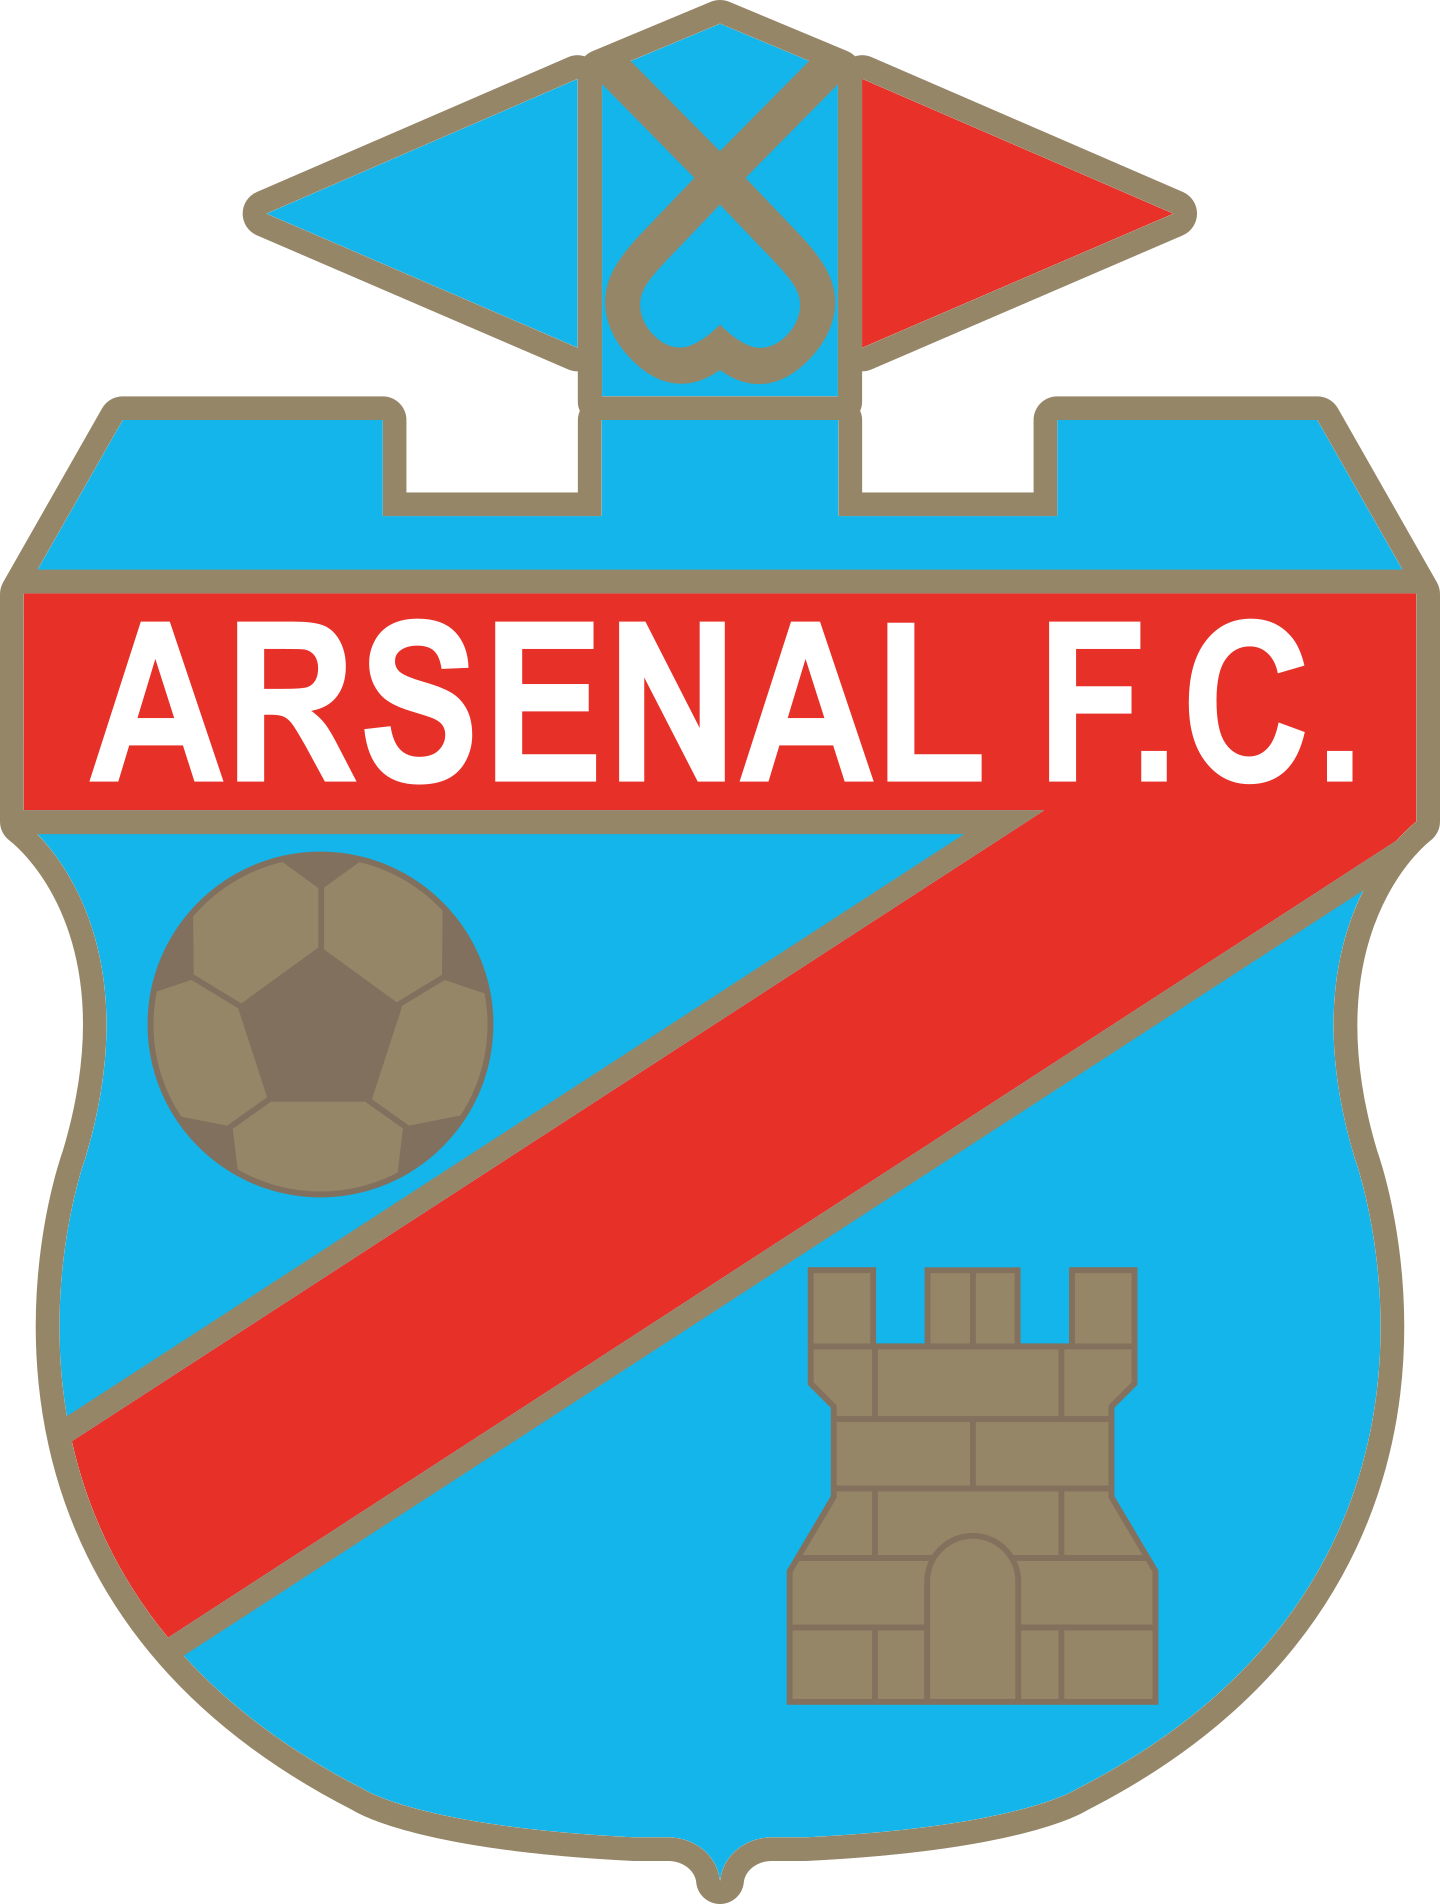 arsenal fc logo 2 - Arsenal FC Sarandí Logo